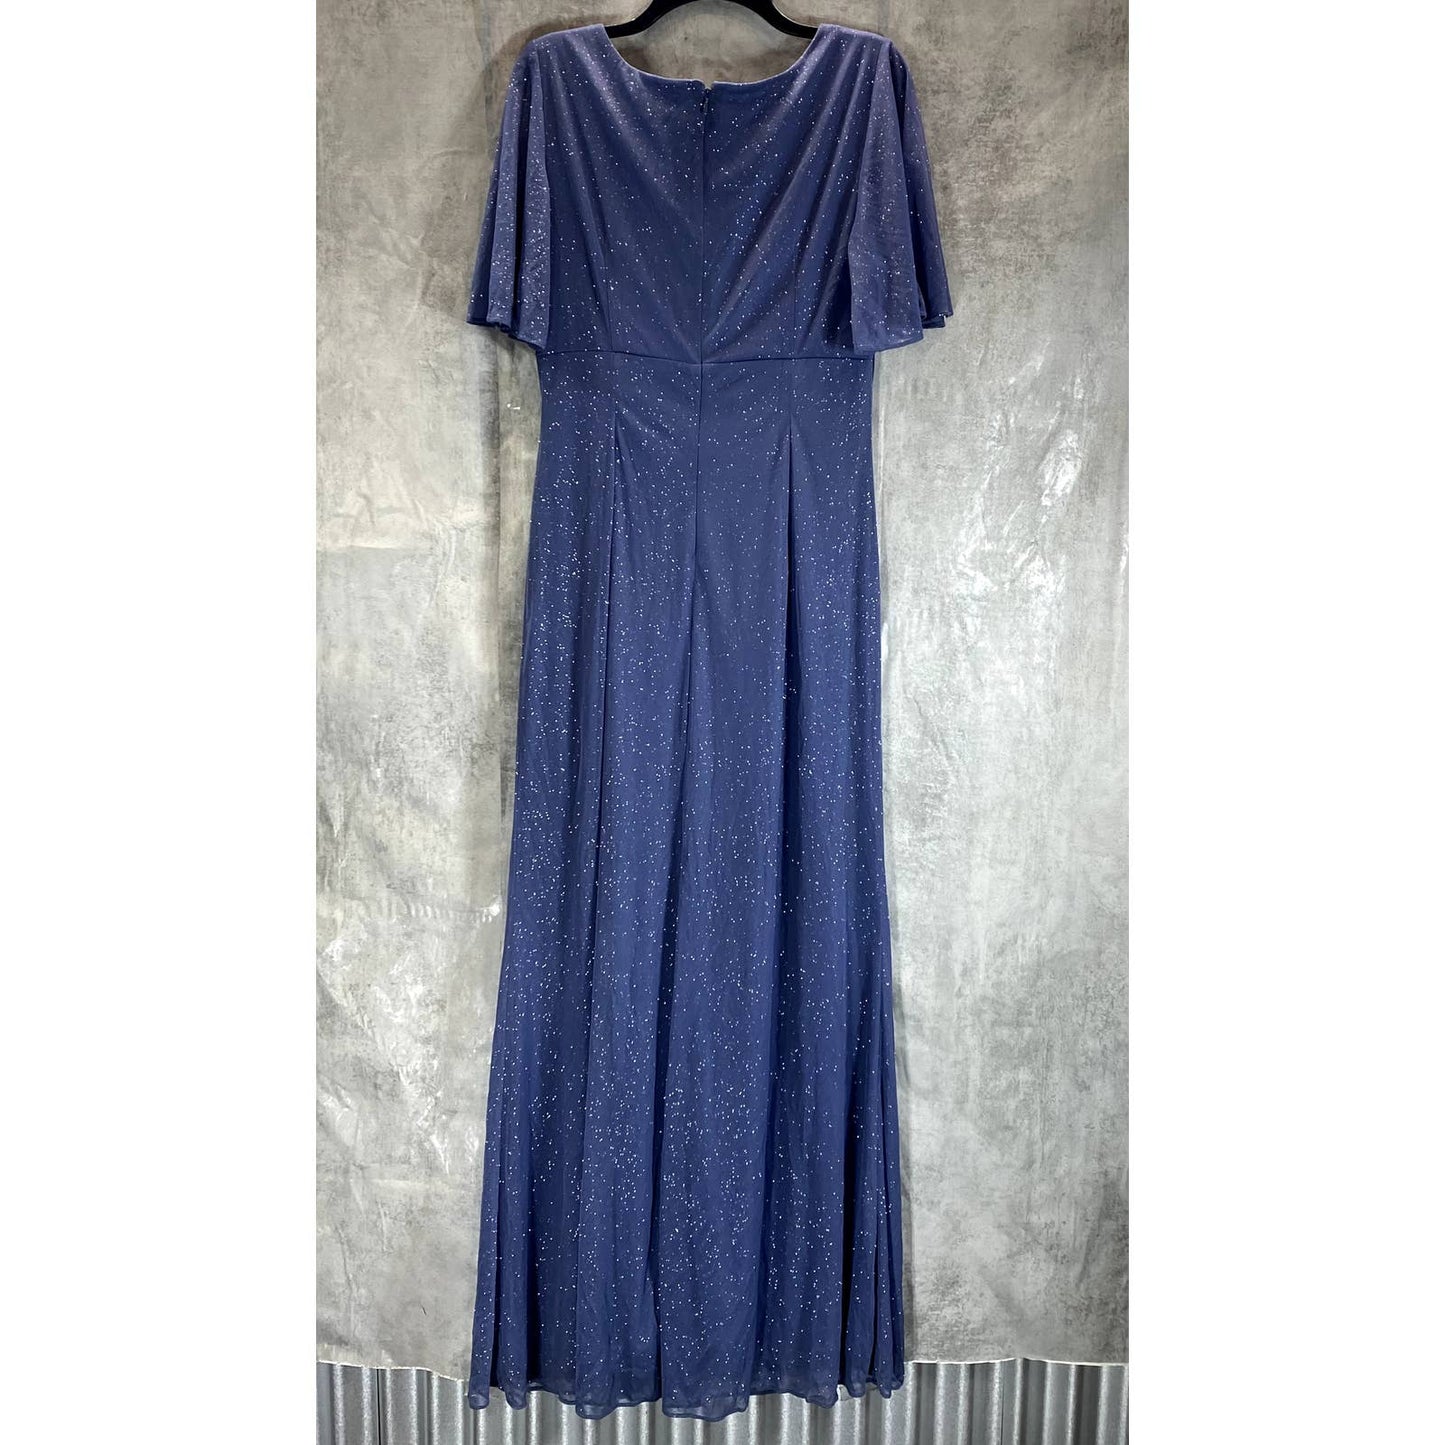 SLNY Women's Dusty Blue Glitter Mesh Flare Sleeve Ruched Rhinestone Waist Gown